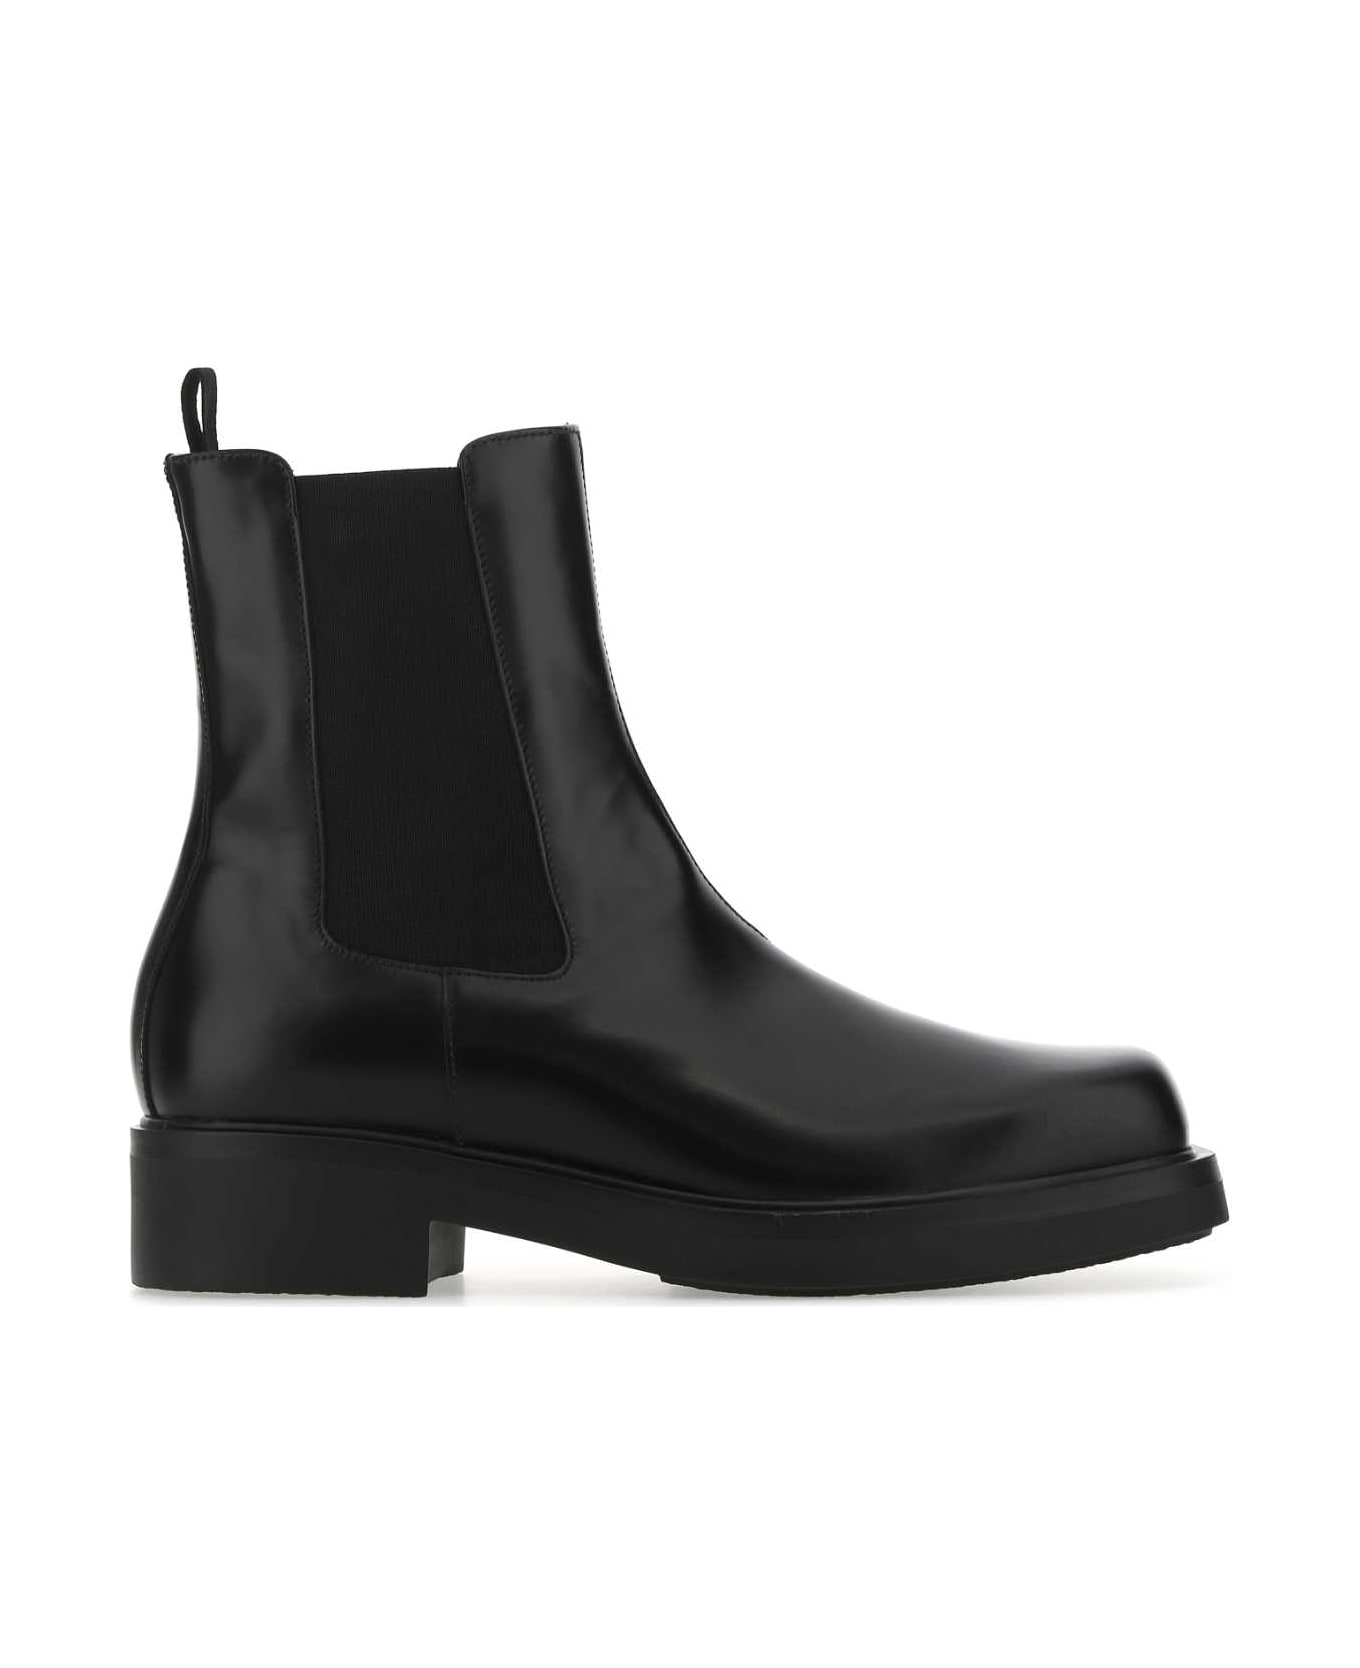 Prada Black Leather Ankle Boots - F0002